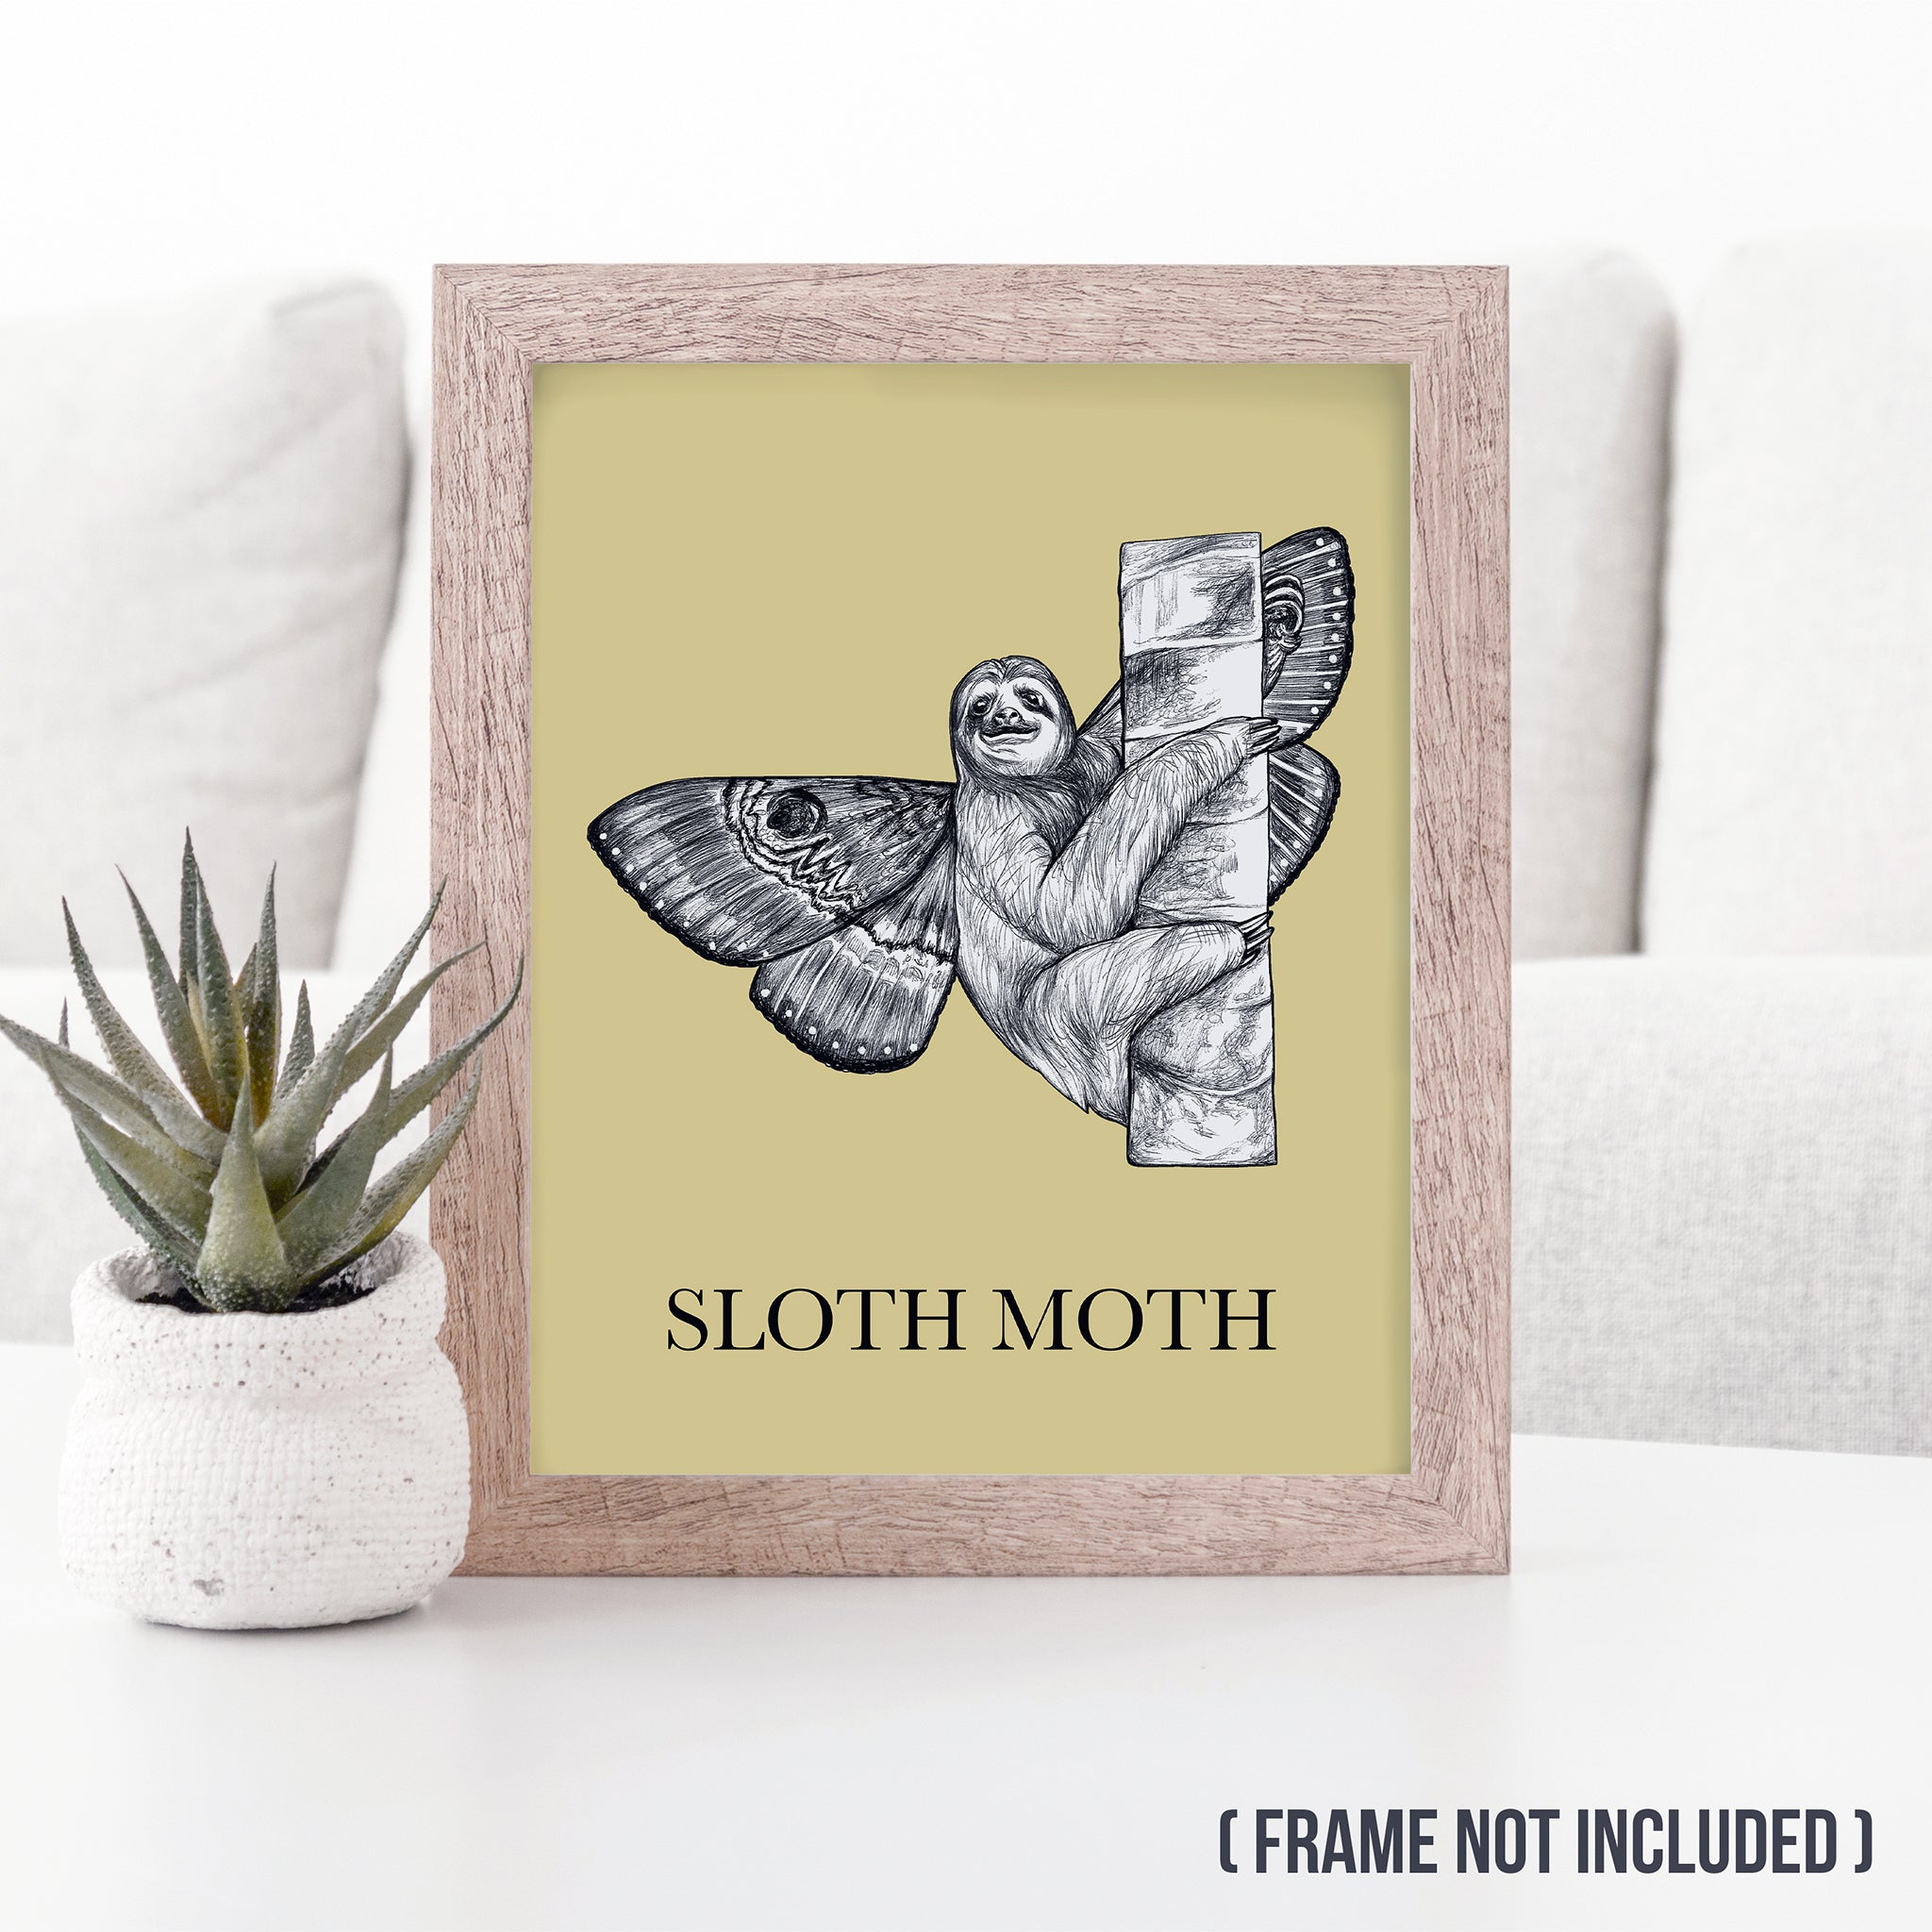 Sloth Moth 8x10" Color Print